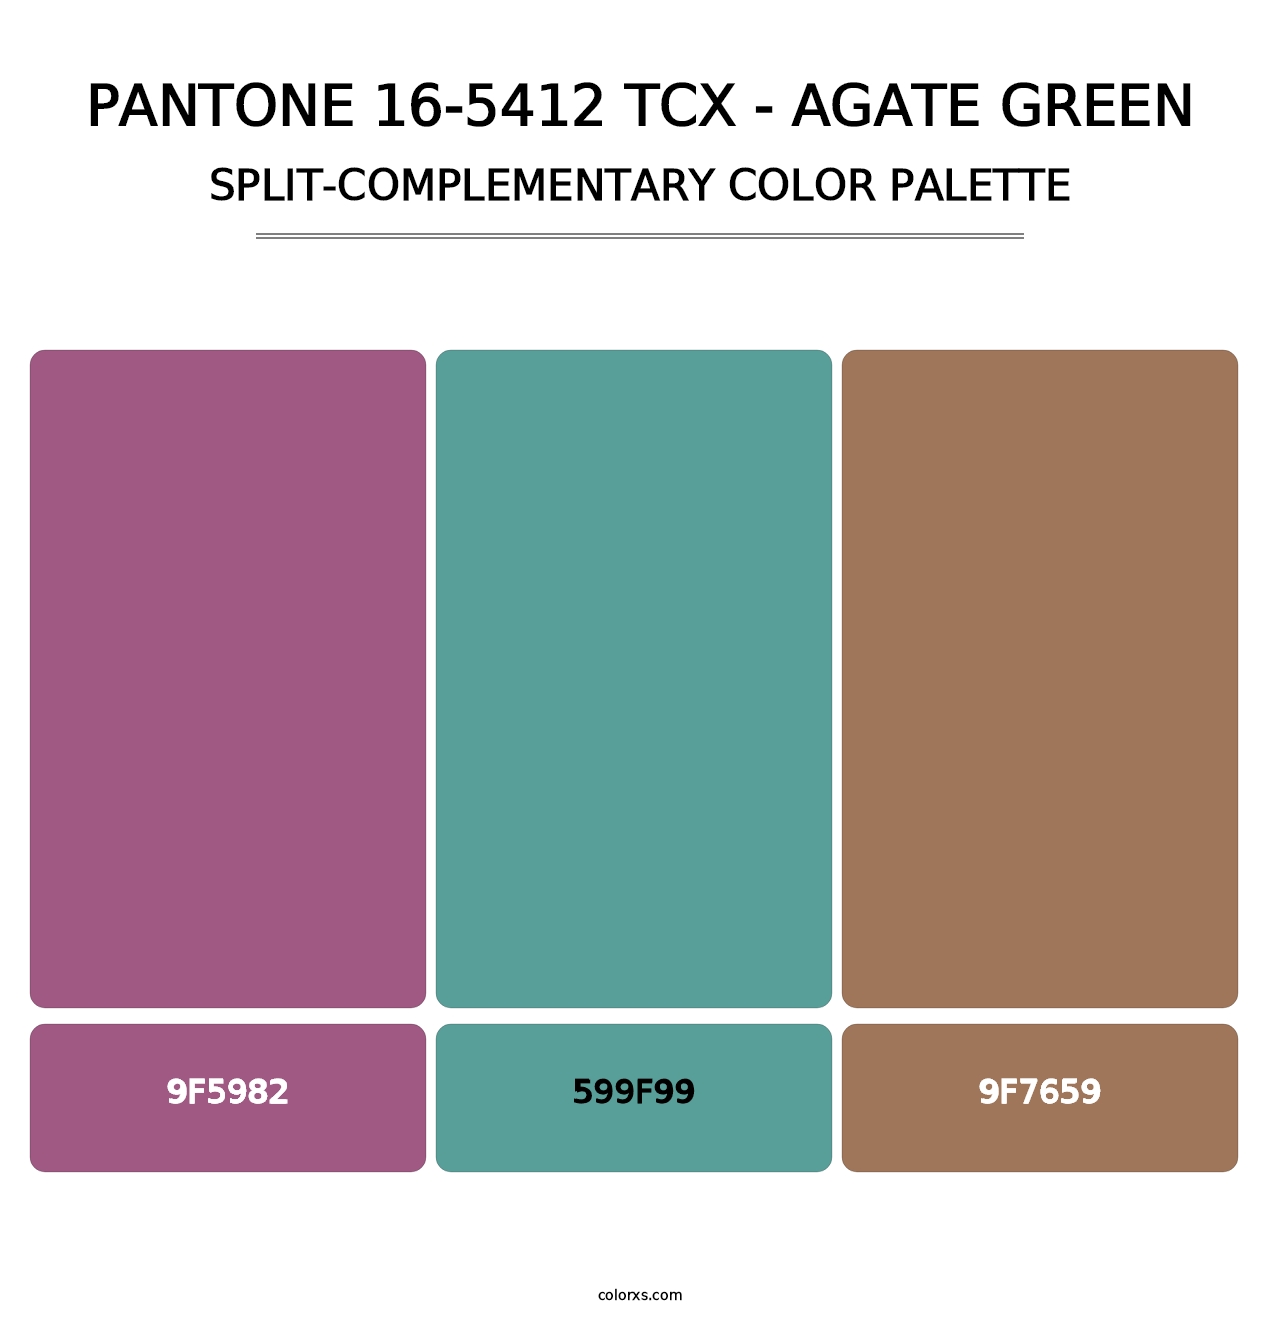 PANTONE 16-5412 TCX - Agate Green - Split-Complementary Color Palette